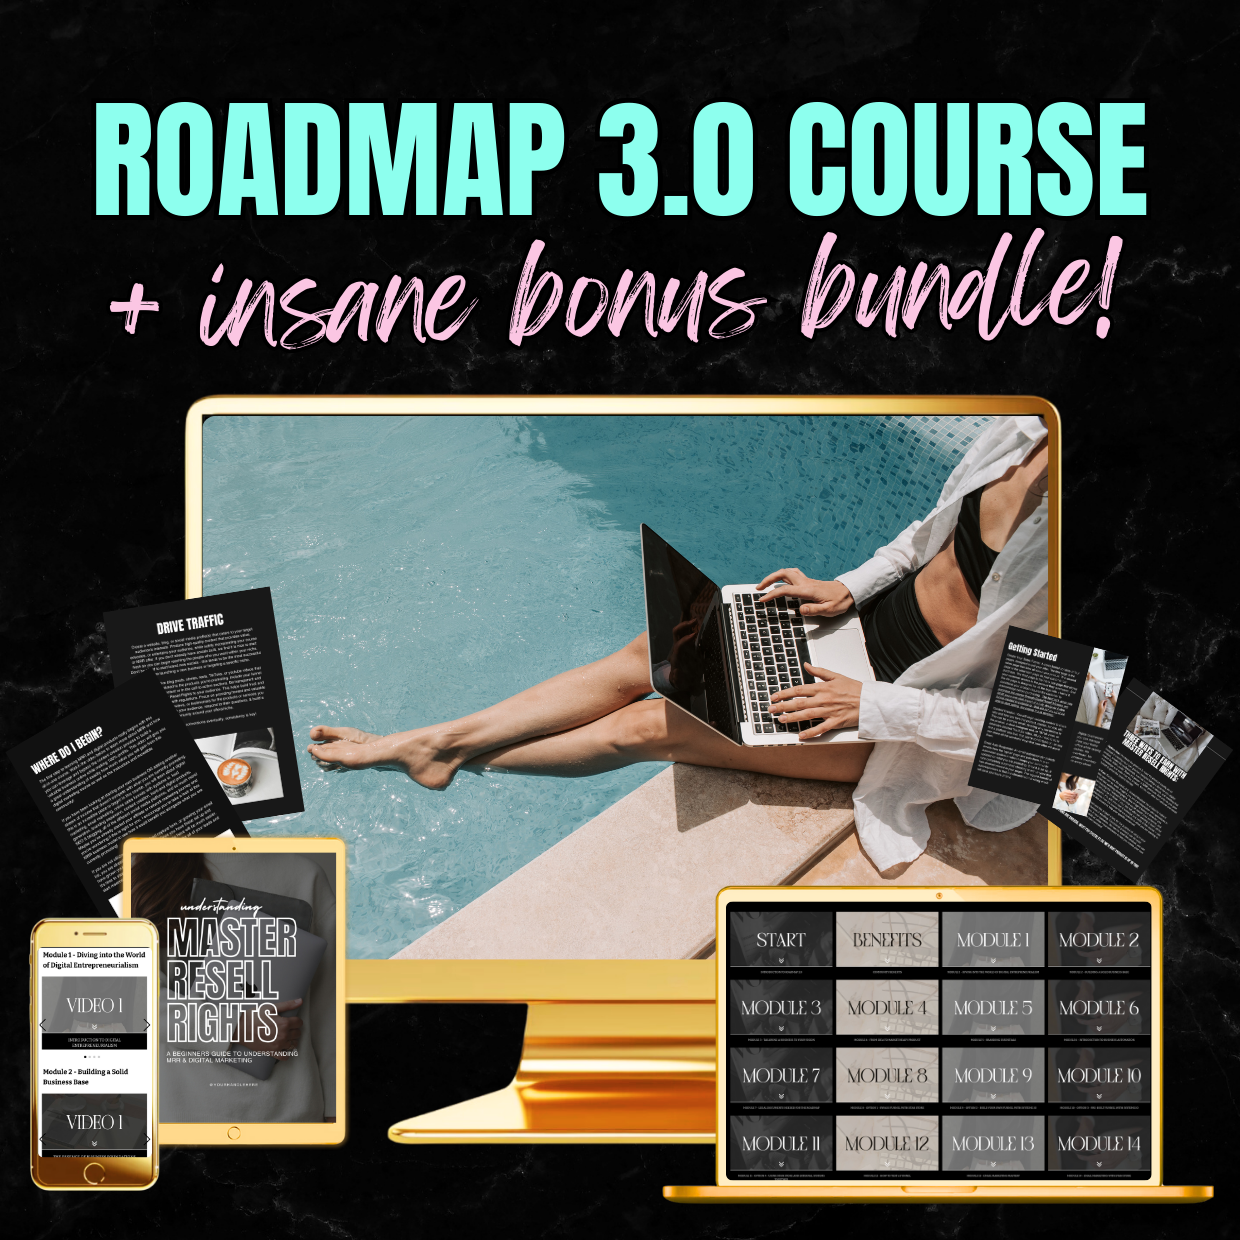 The Roadmap 3.0 Course & Insane Free Bonus Bundle!